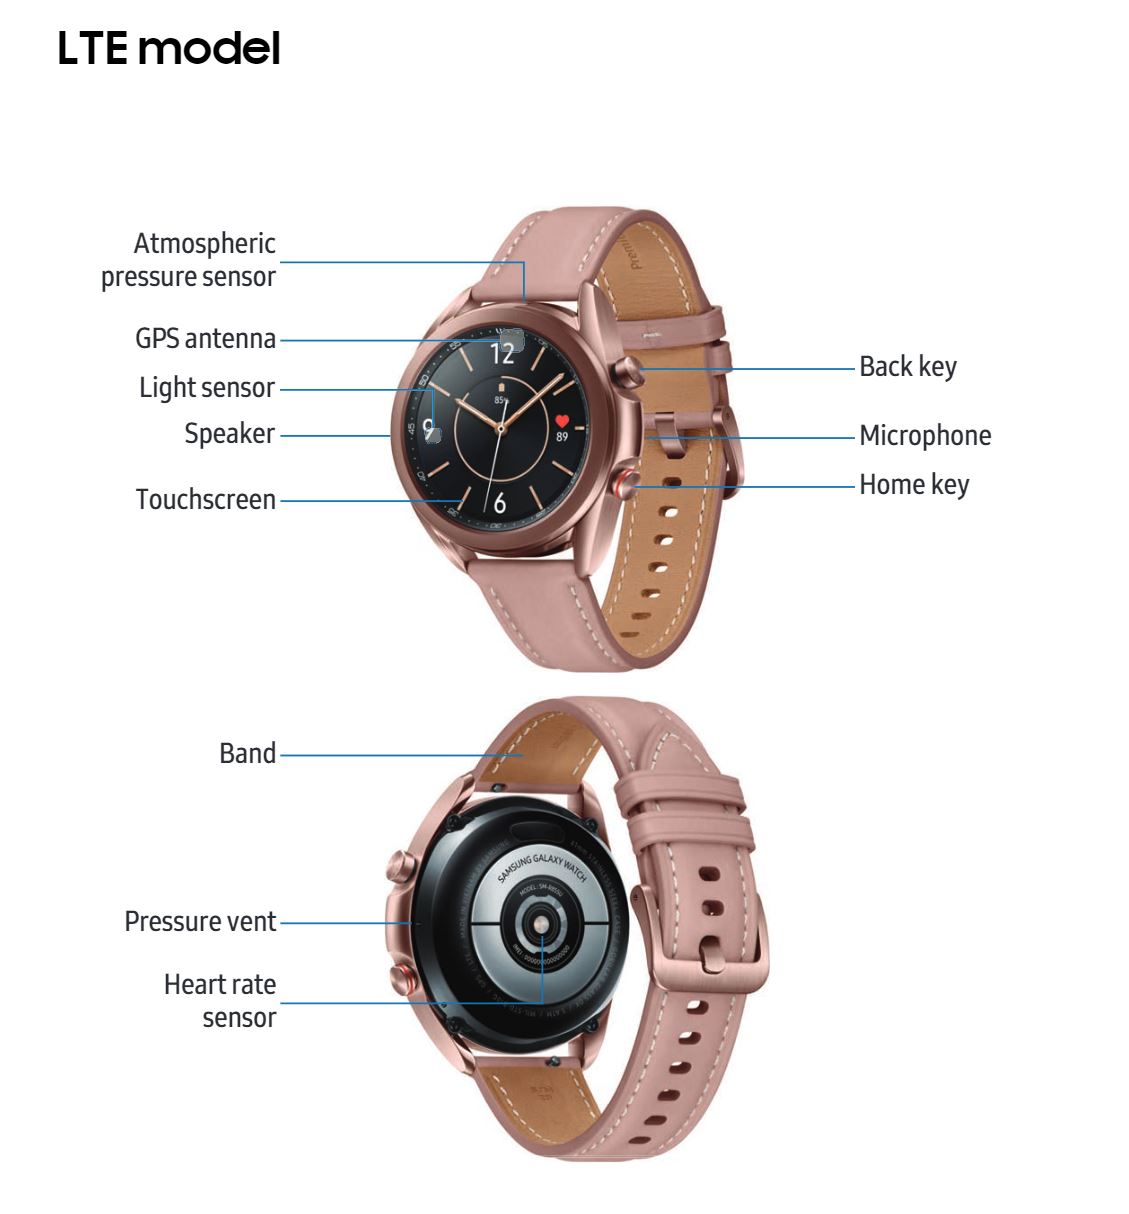 Galaxy Watch 3 user manual confirms much - SamMobile